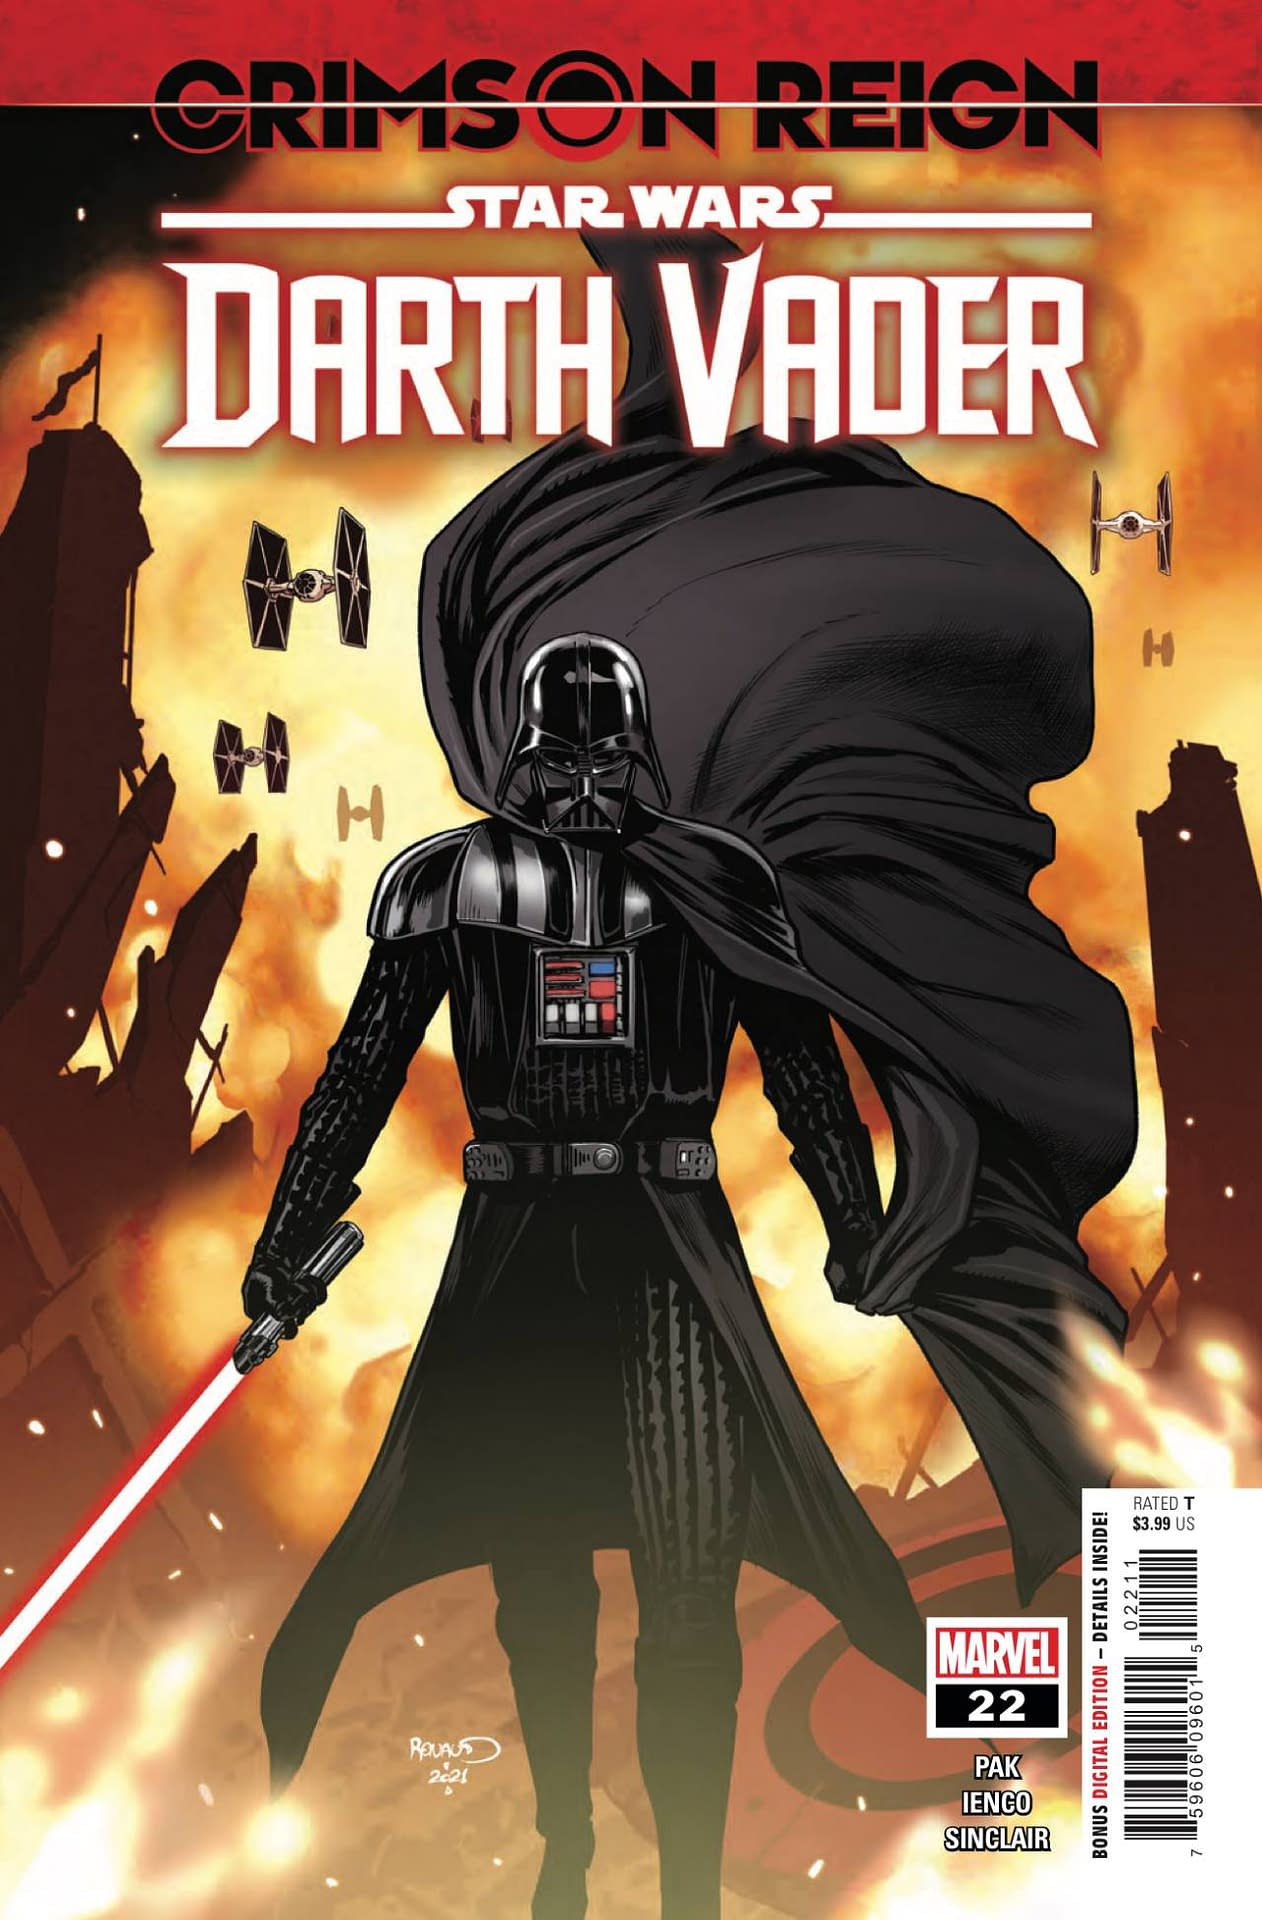 alledaags Koreaans Tegenstander Star Wars: Darth Vader #22 Review: Everything You Love